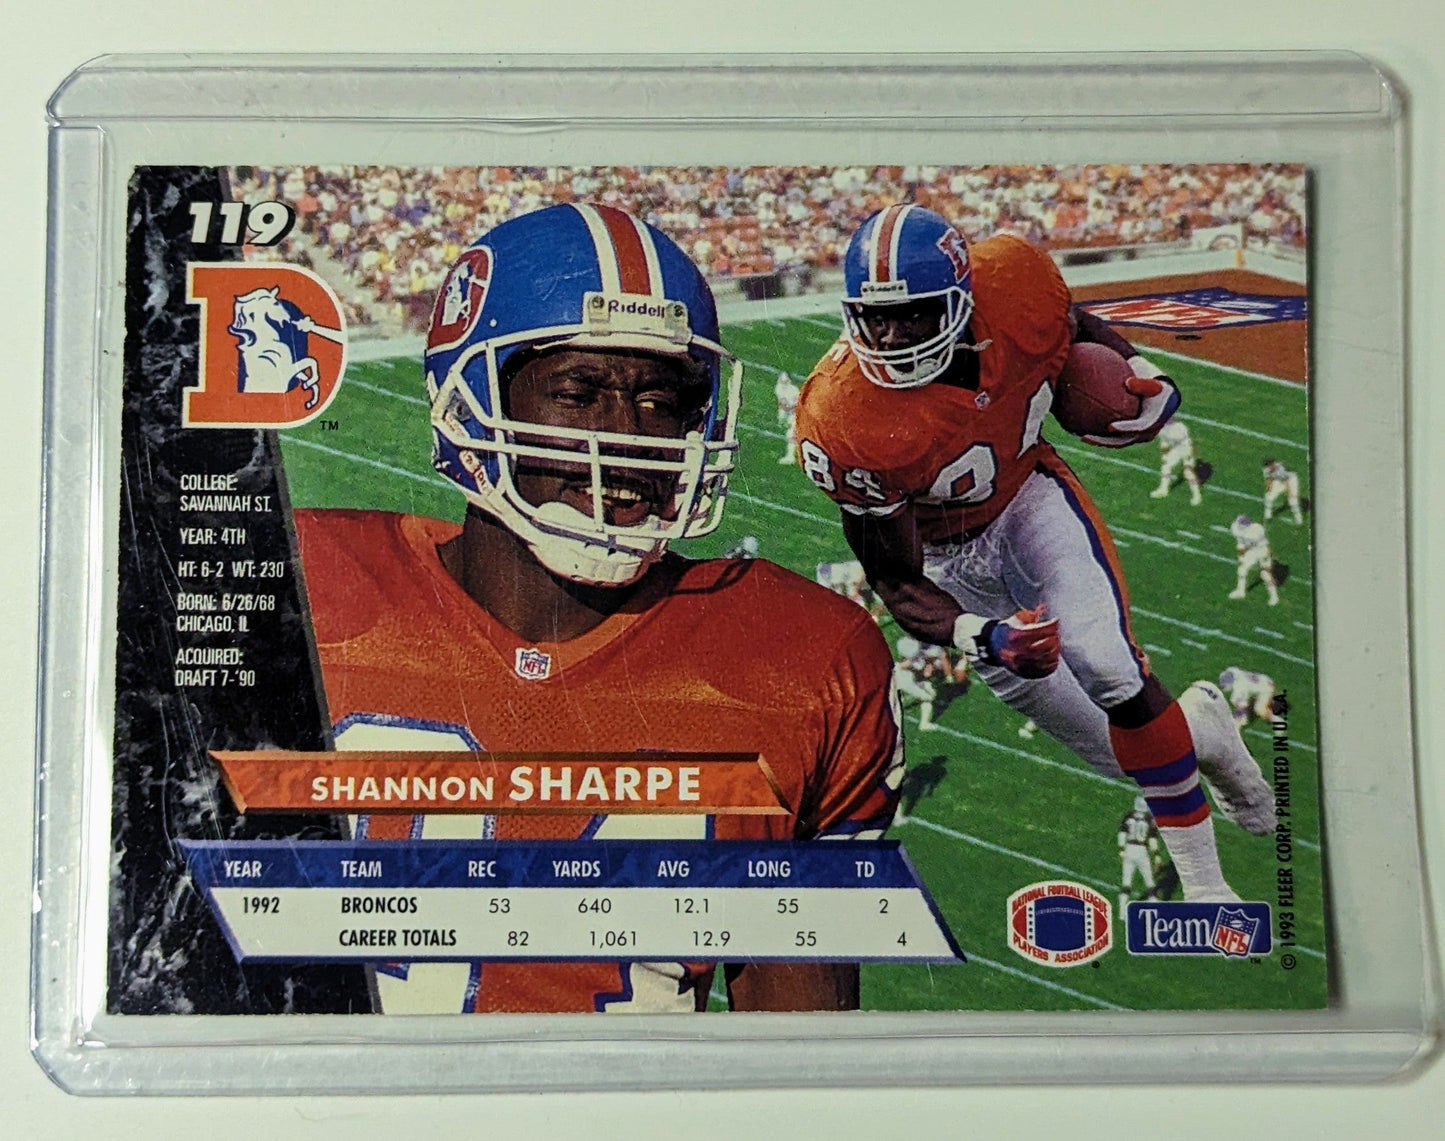 FIINR Football Card 1993 Fleer Shannon Sharpe Football Card #119 - Mint Condition